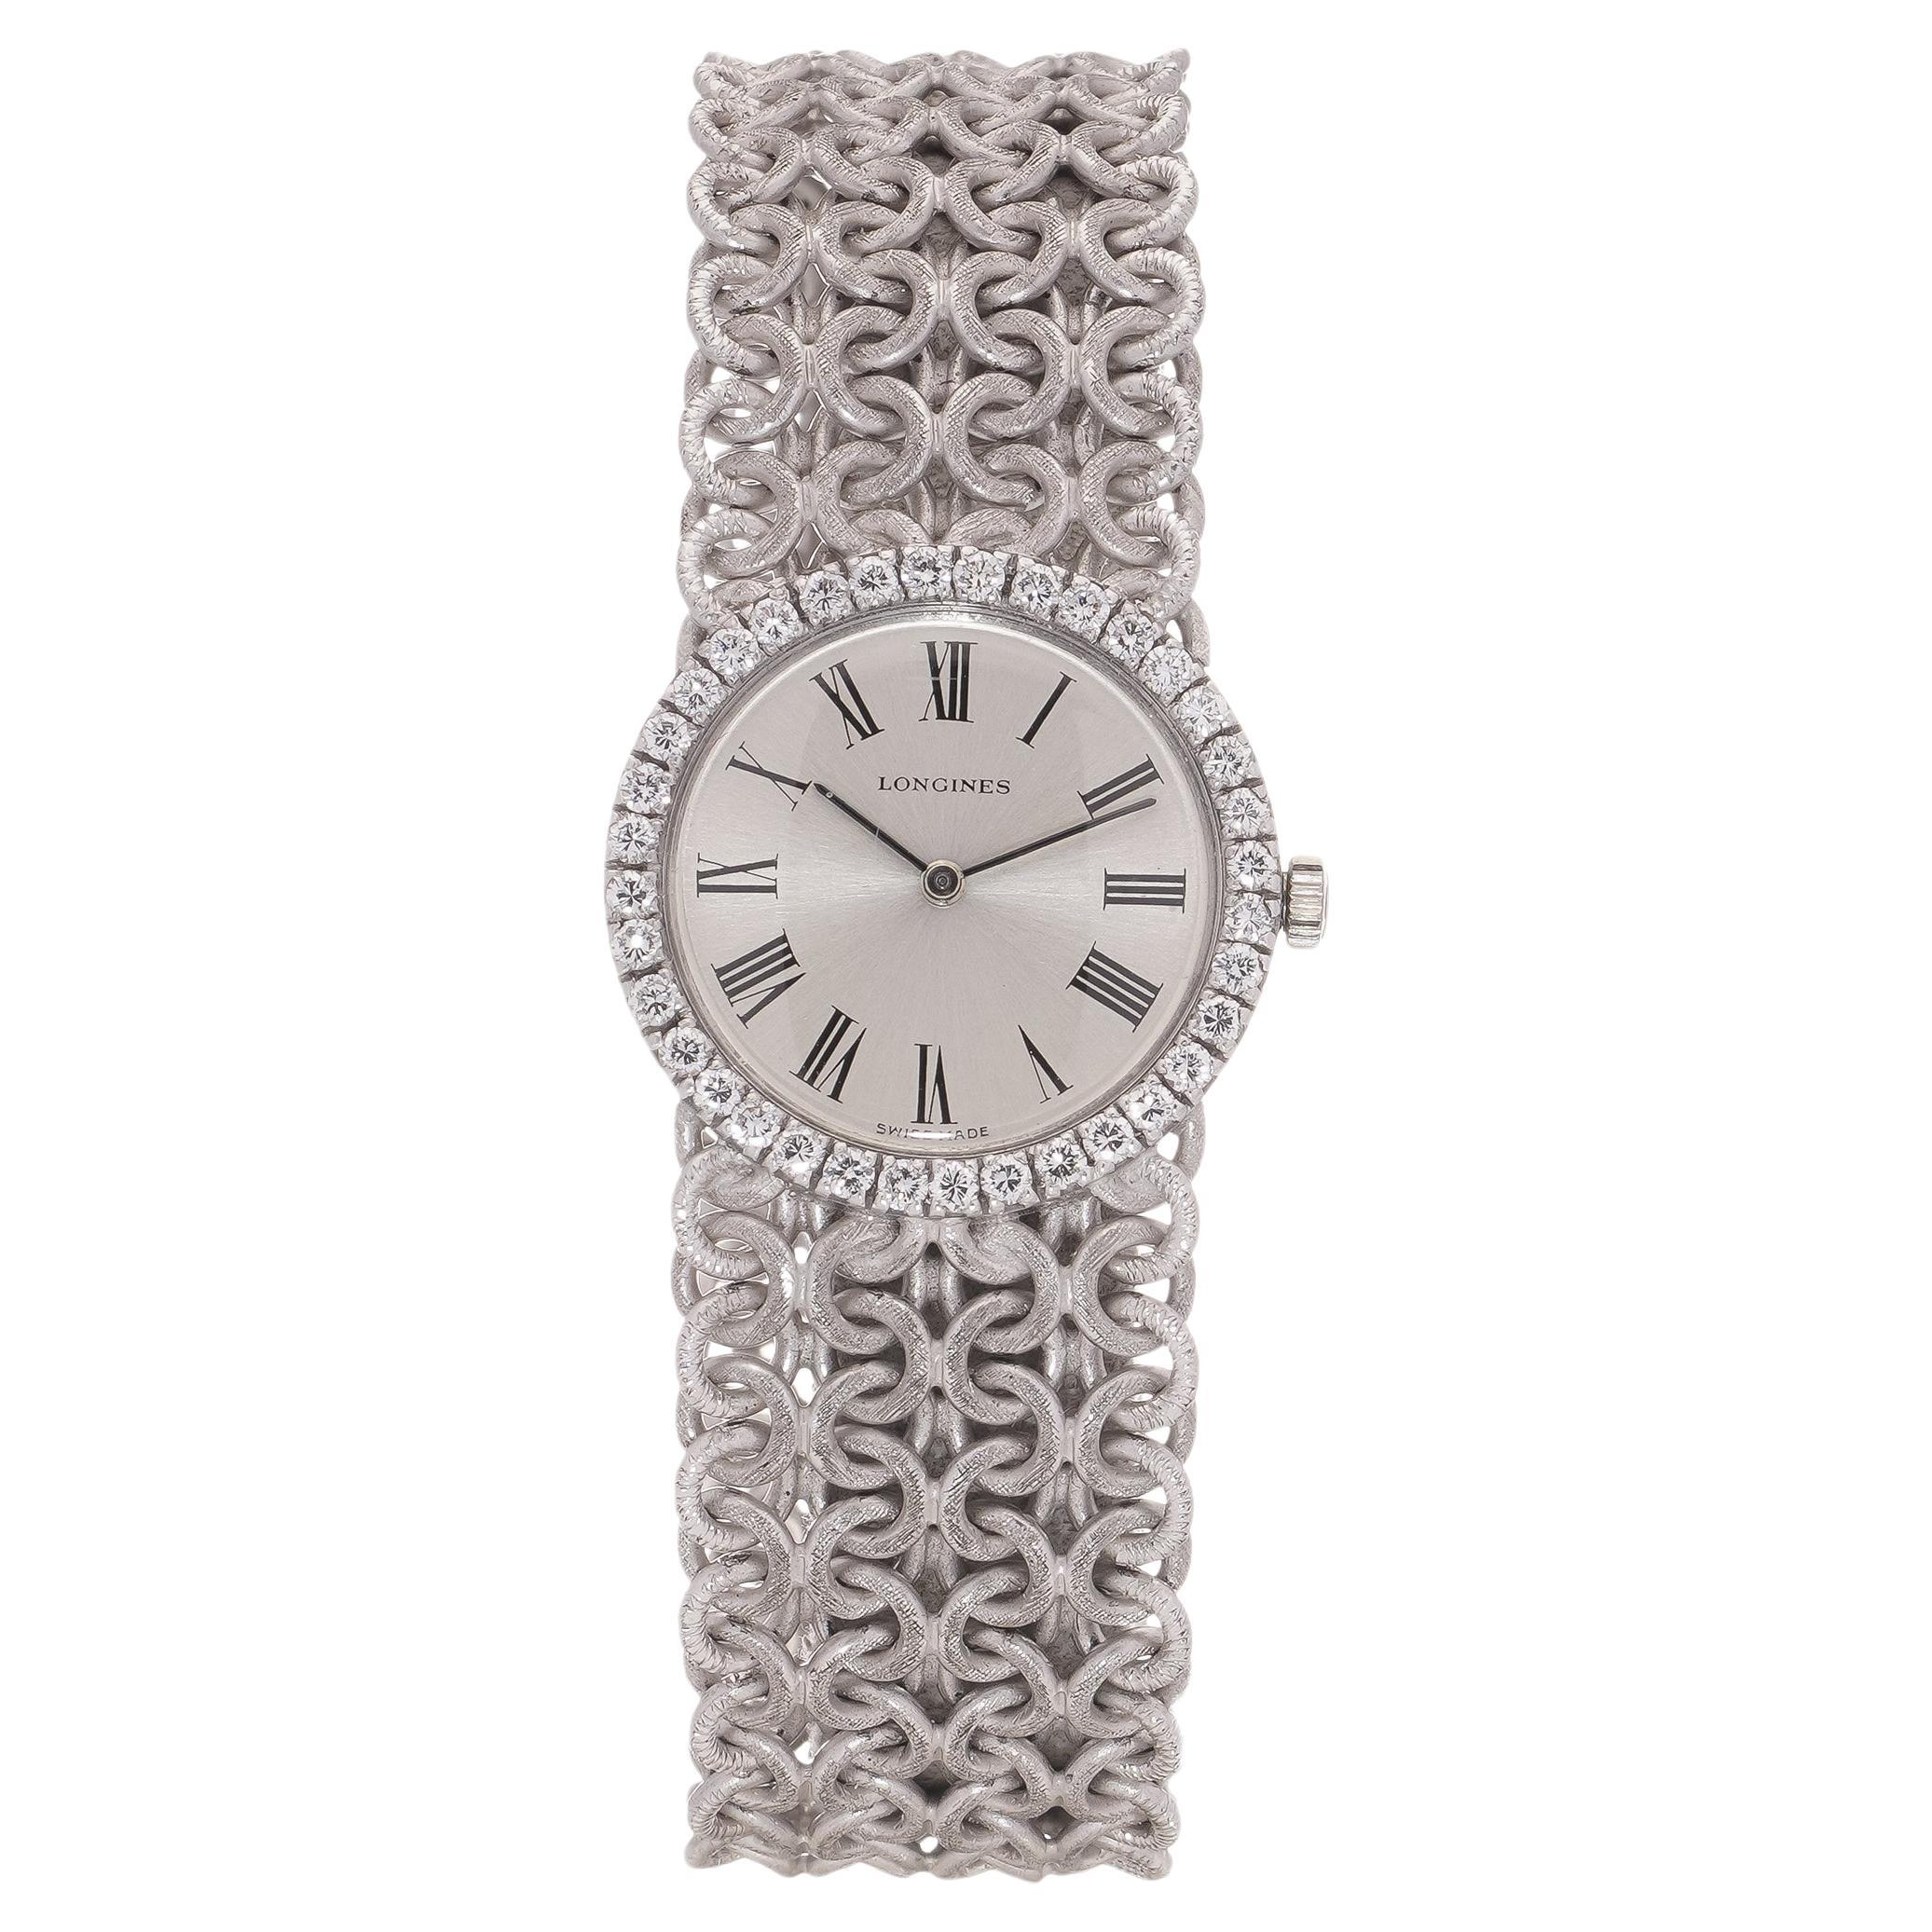 Longines 18kt. white gold ladies' wristwatch with diamond-set bezel For Sale